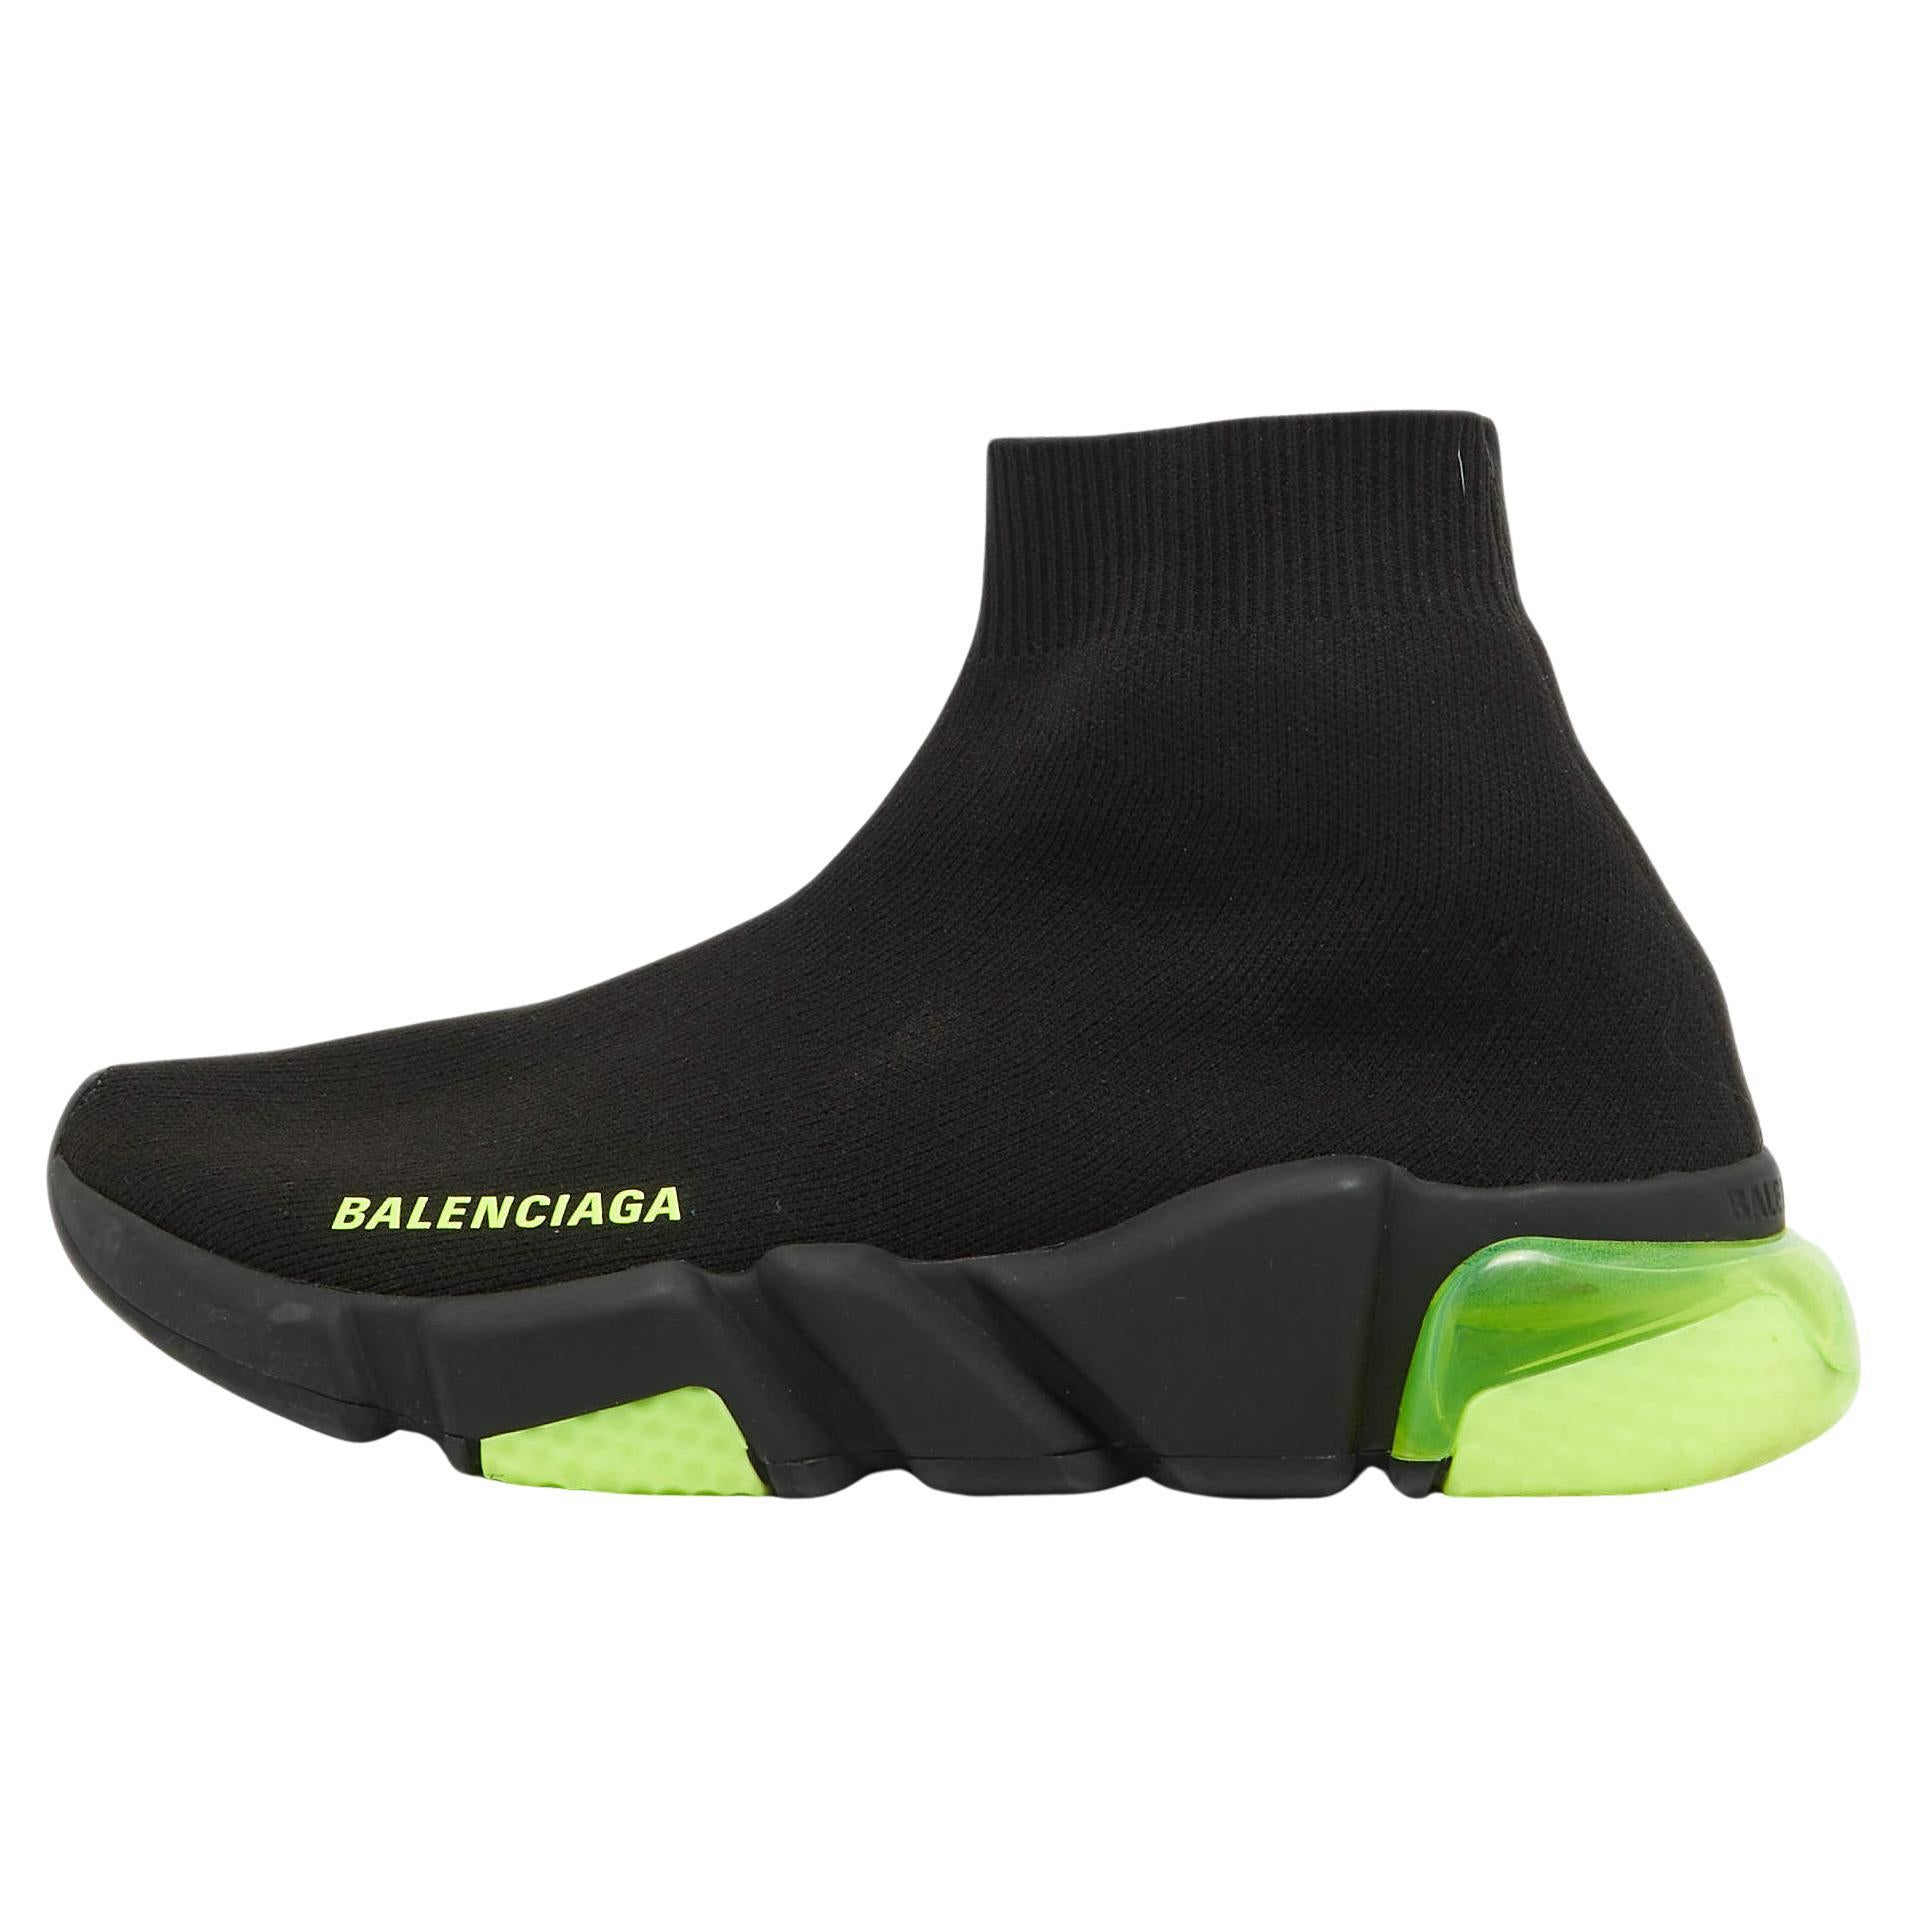 Are Balenciaga Speed Trainers waterproof?